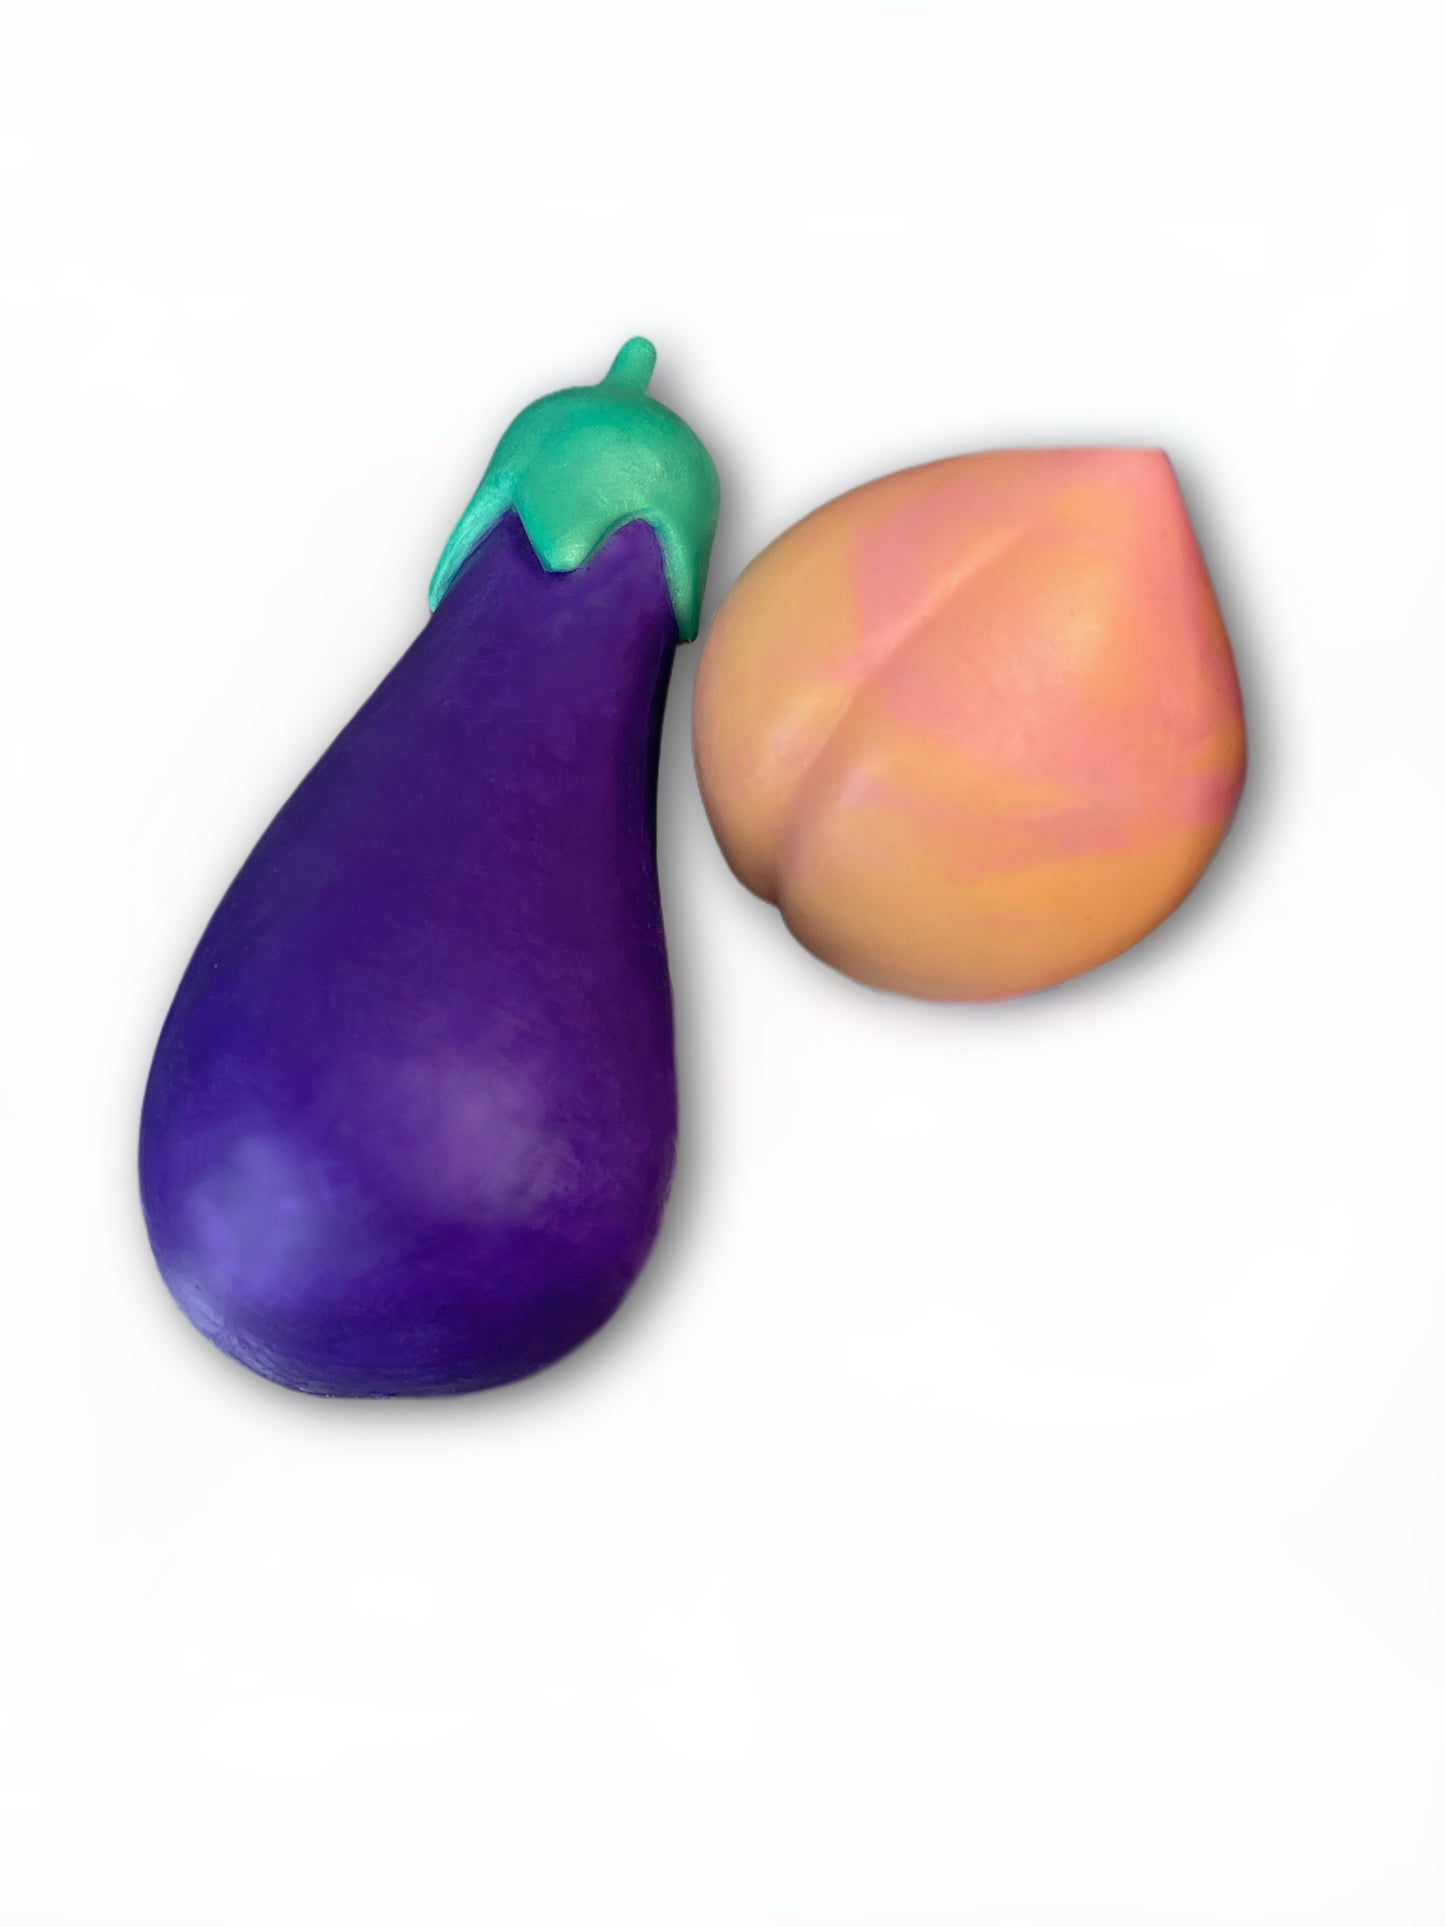 Peach and Eggplant Emoji Soap Bar Set